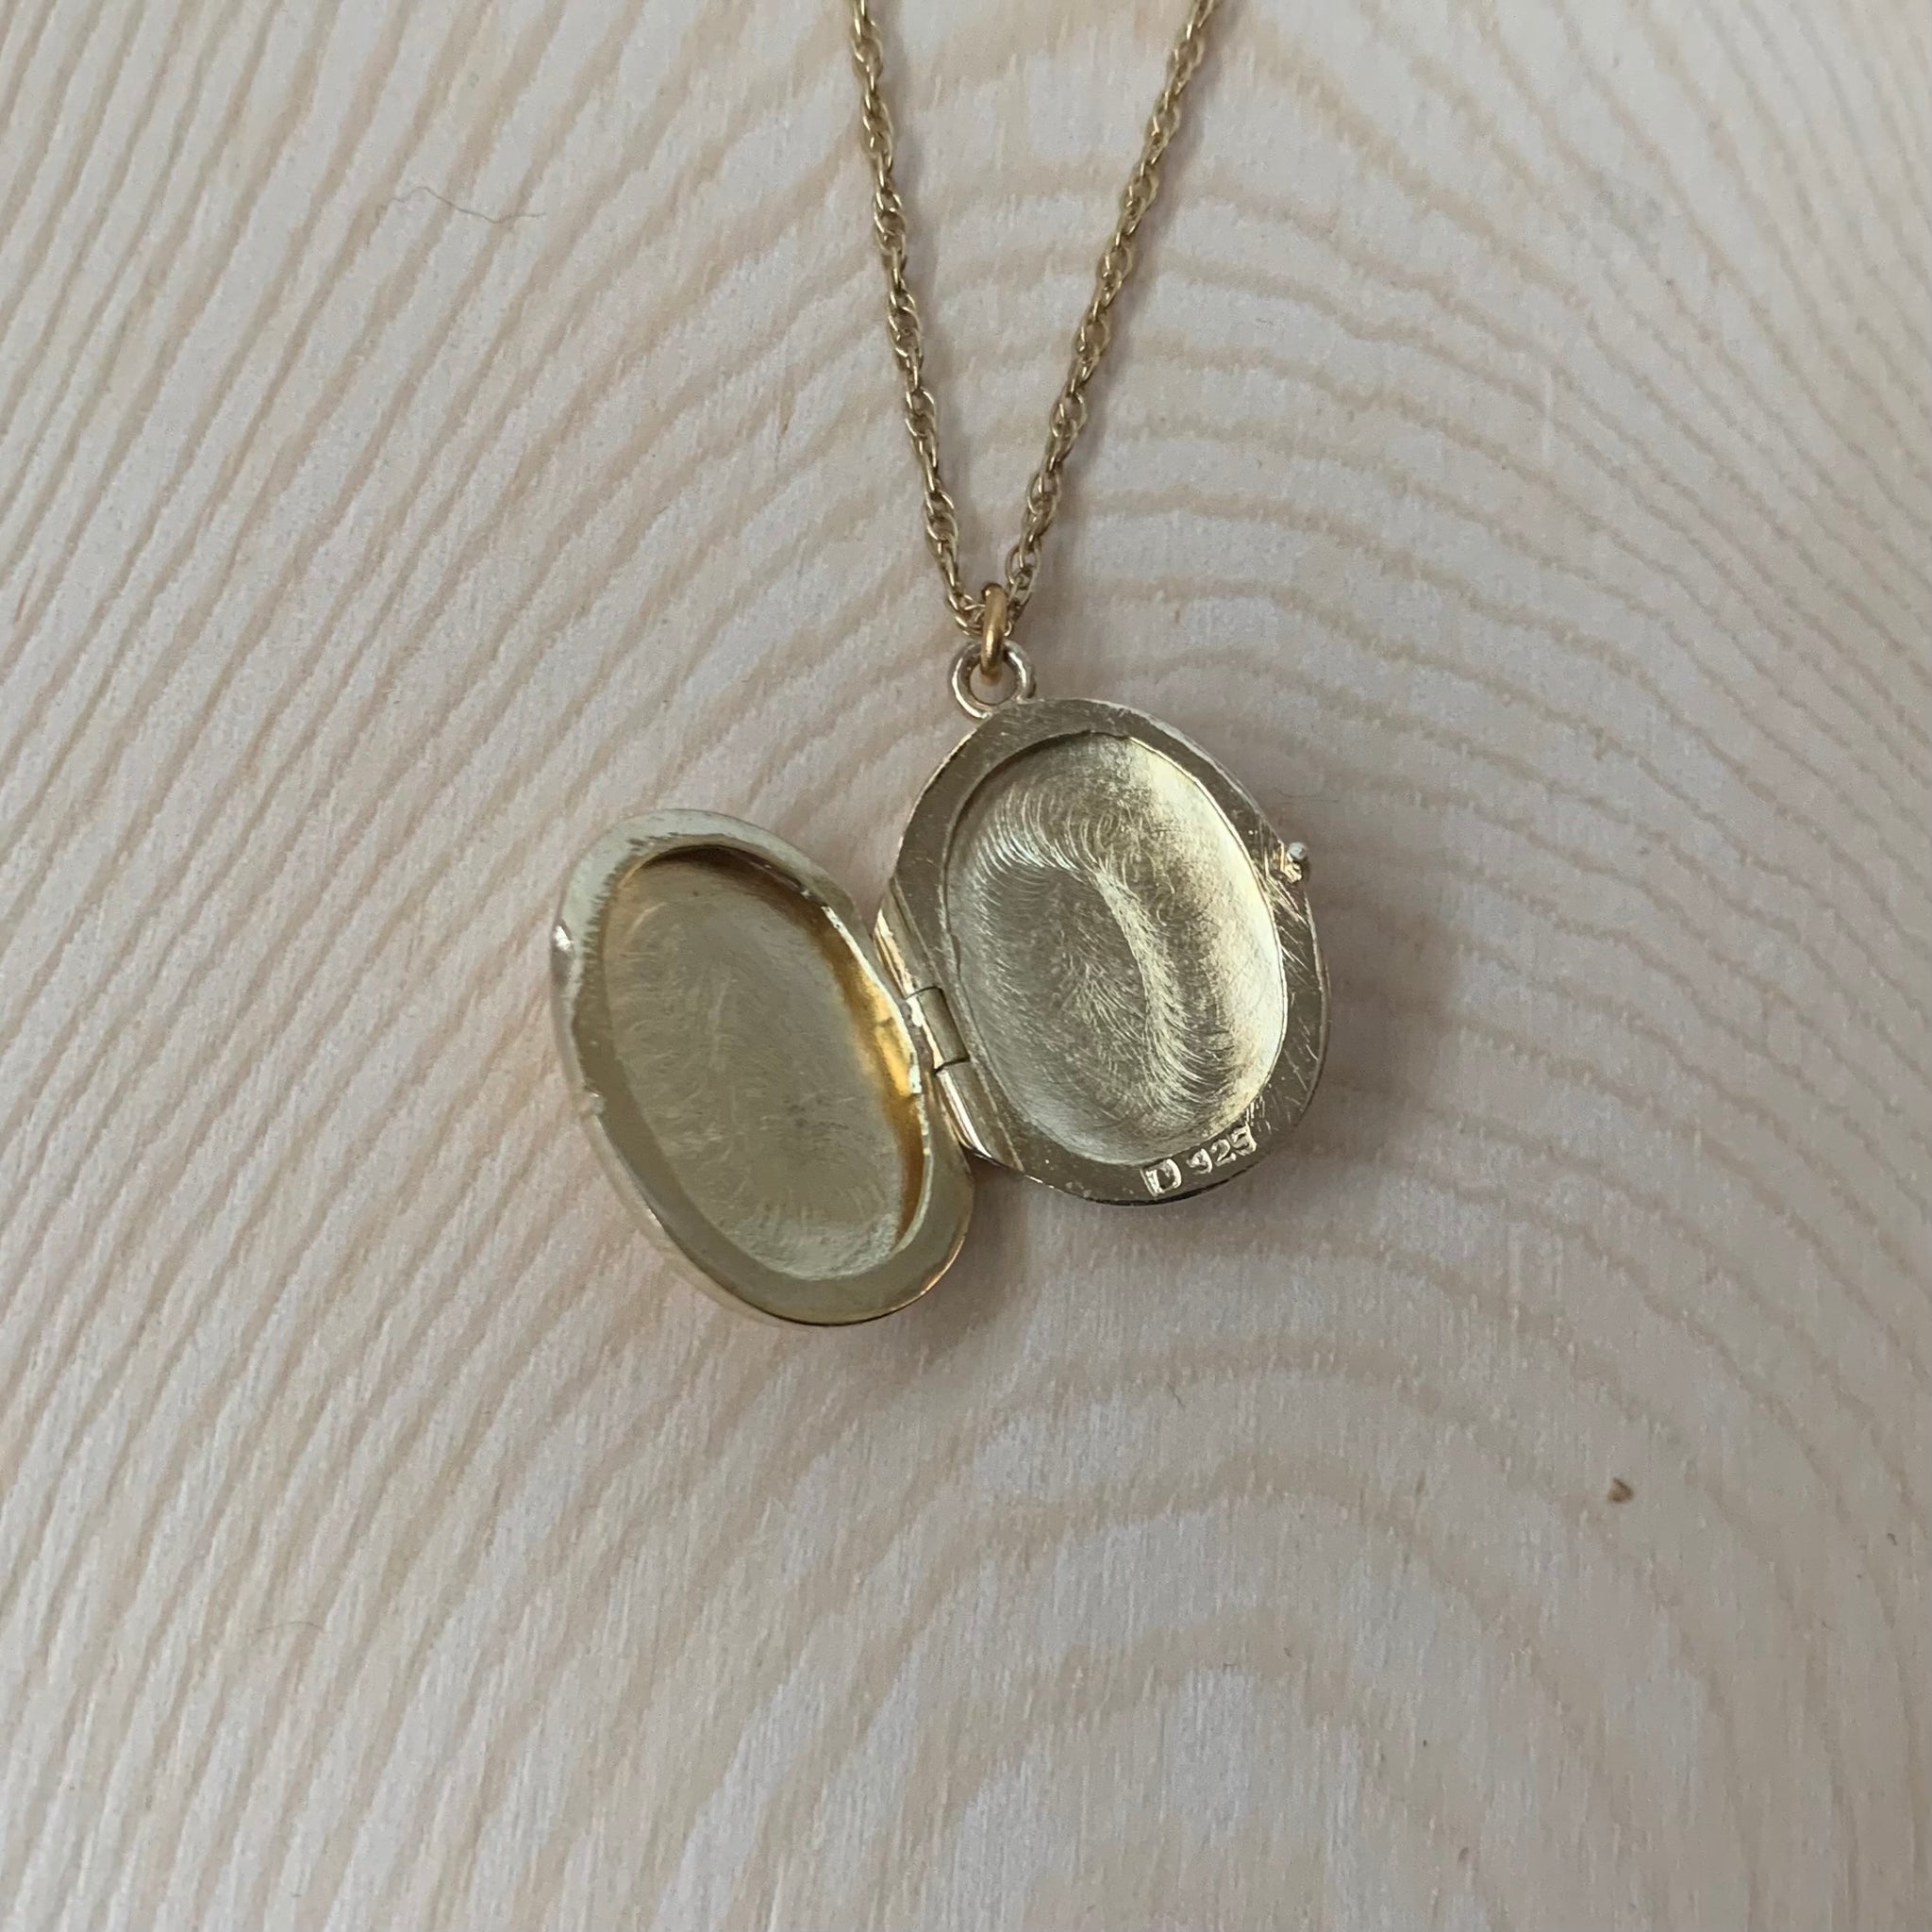 Stone Cooper vintage Oval locket necklace